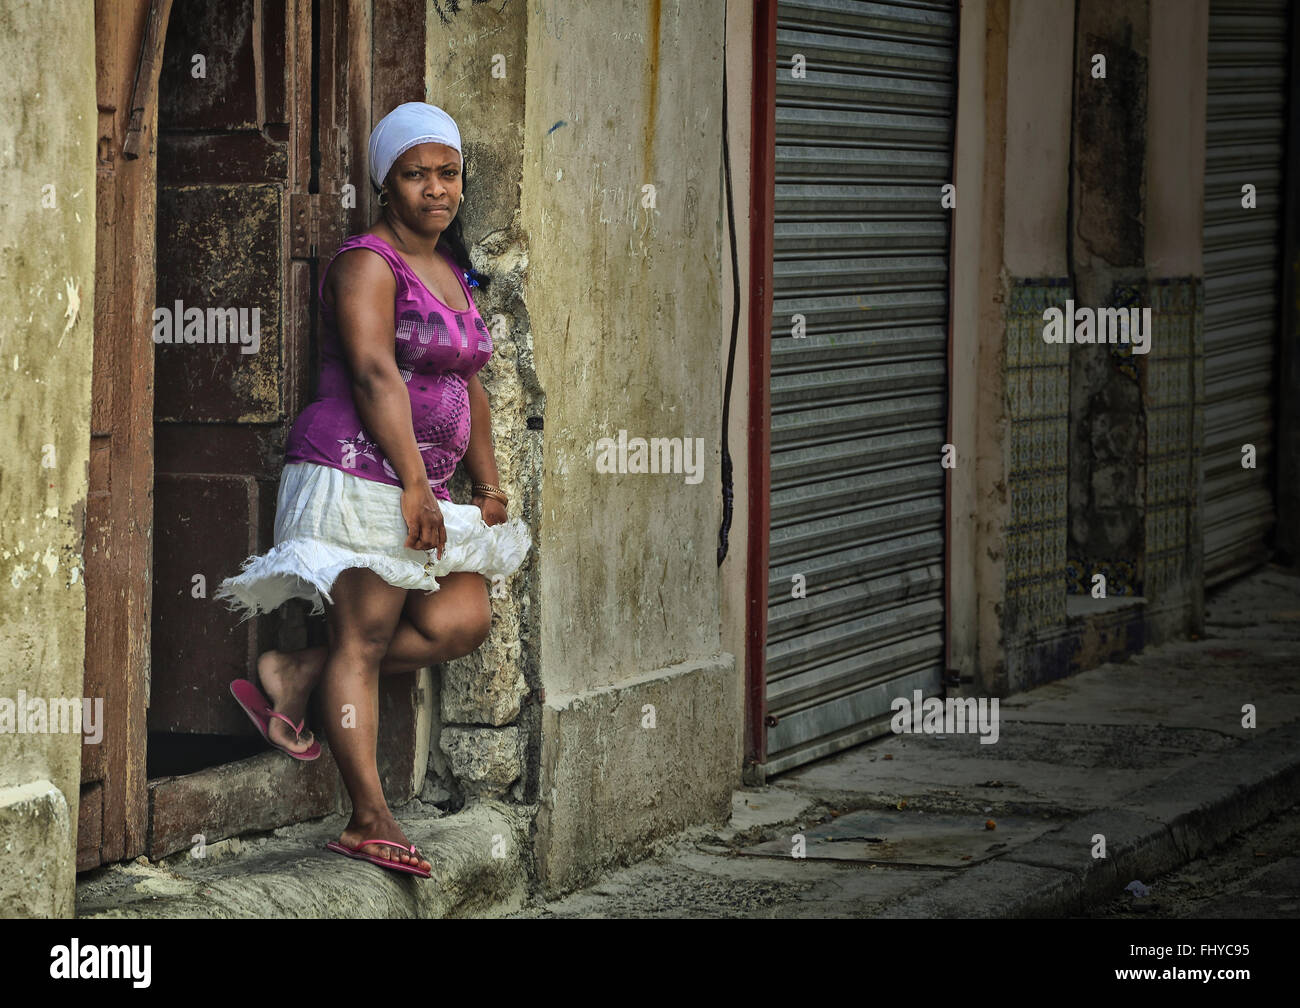 Cuban Nude Women Photo 29